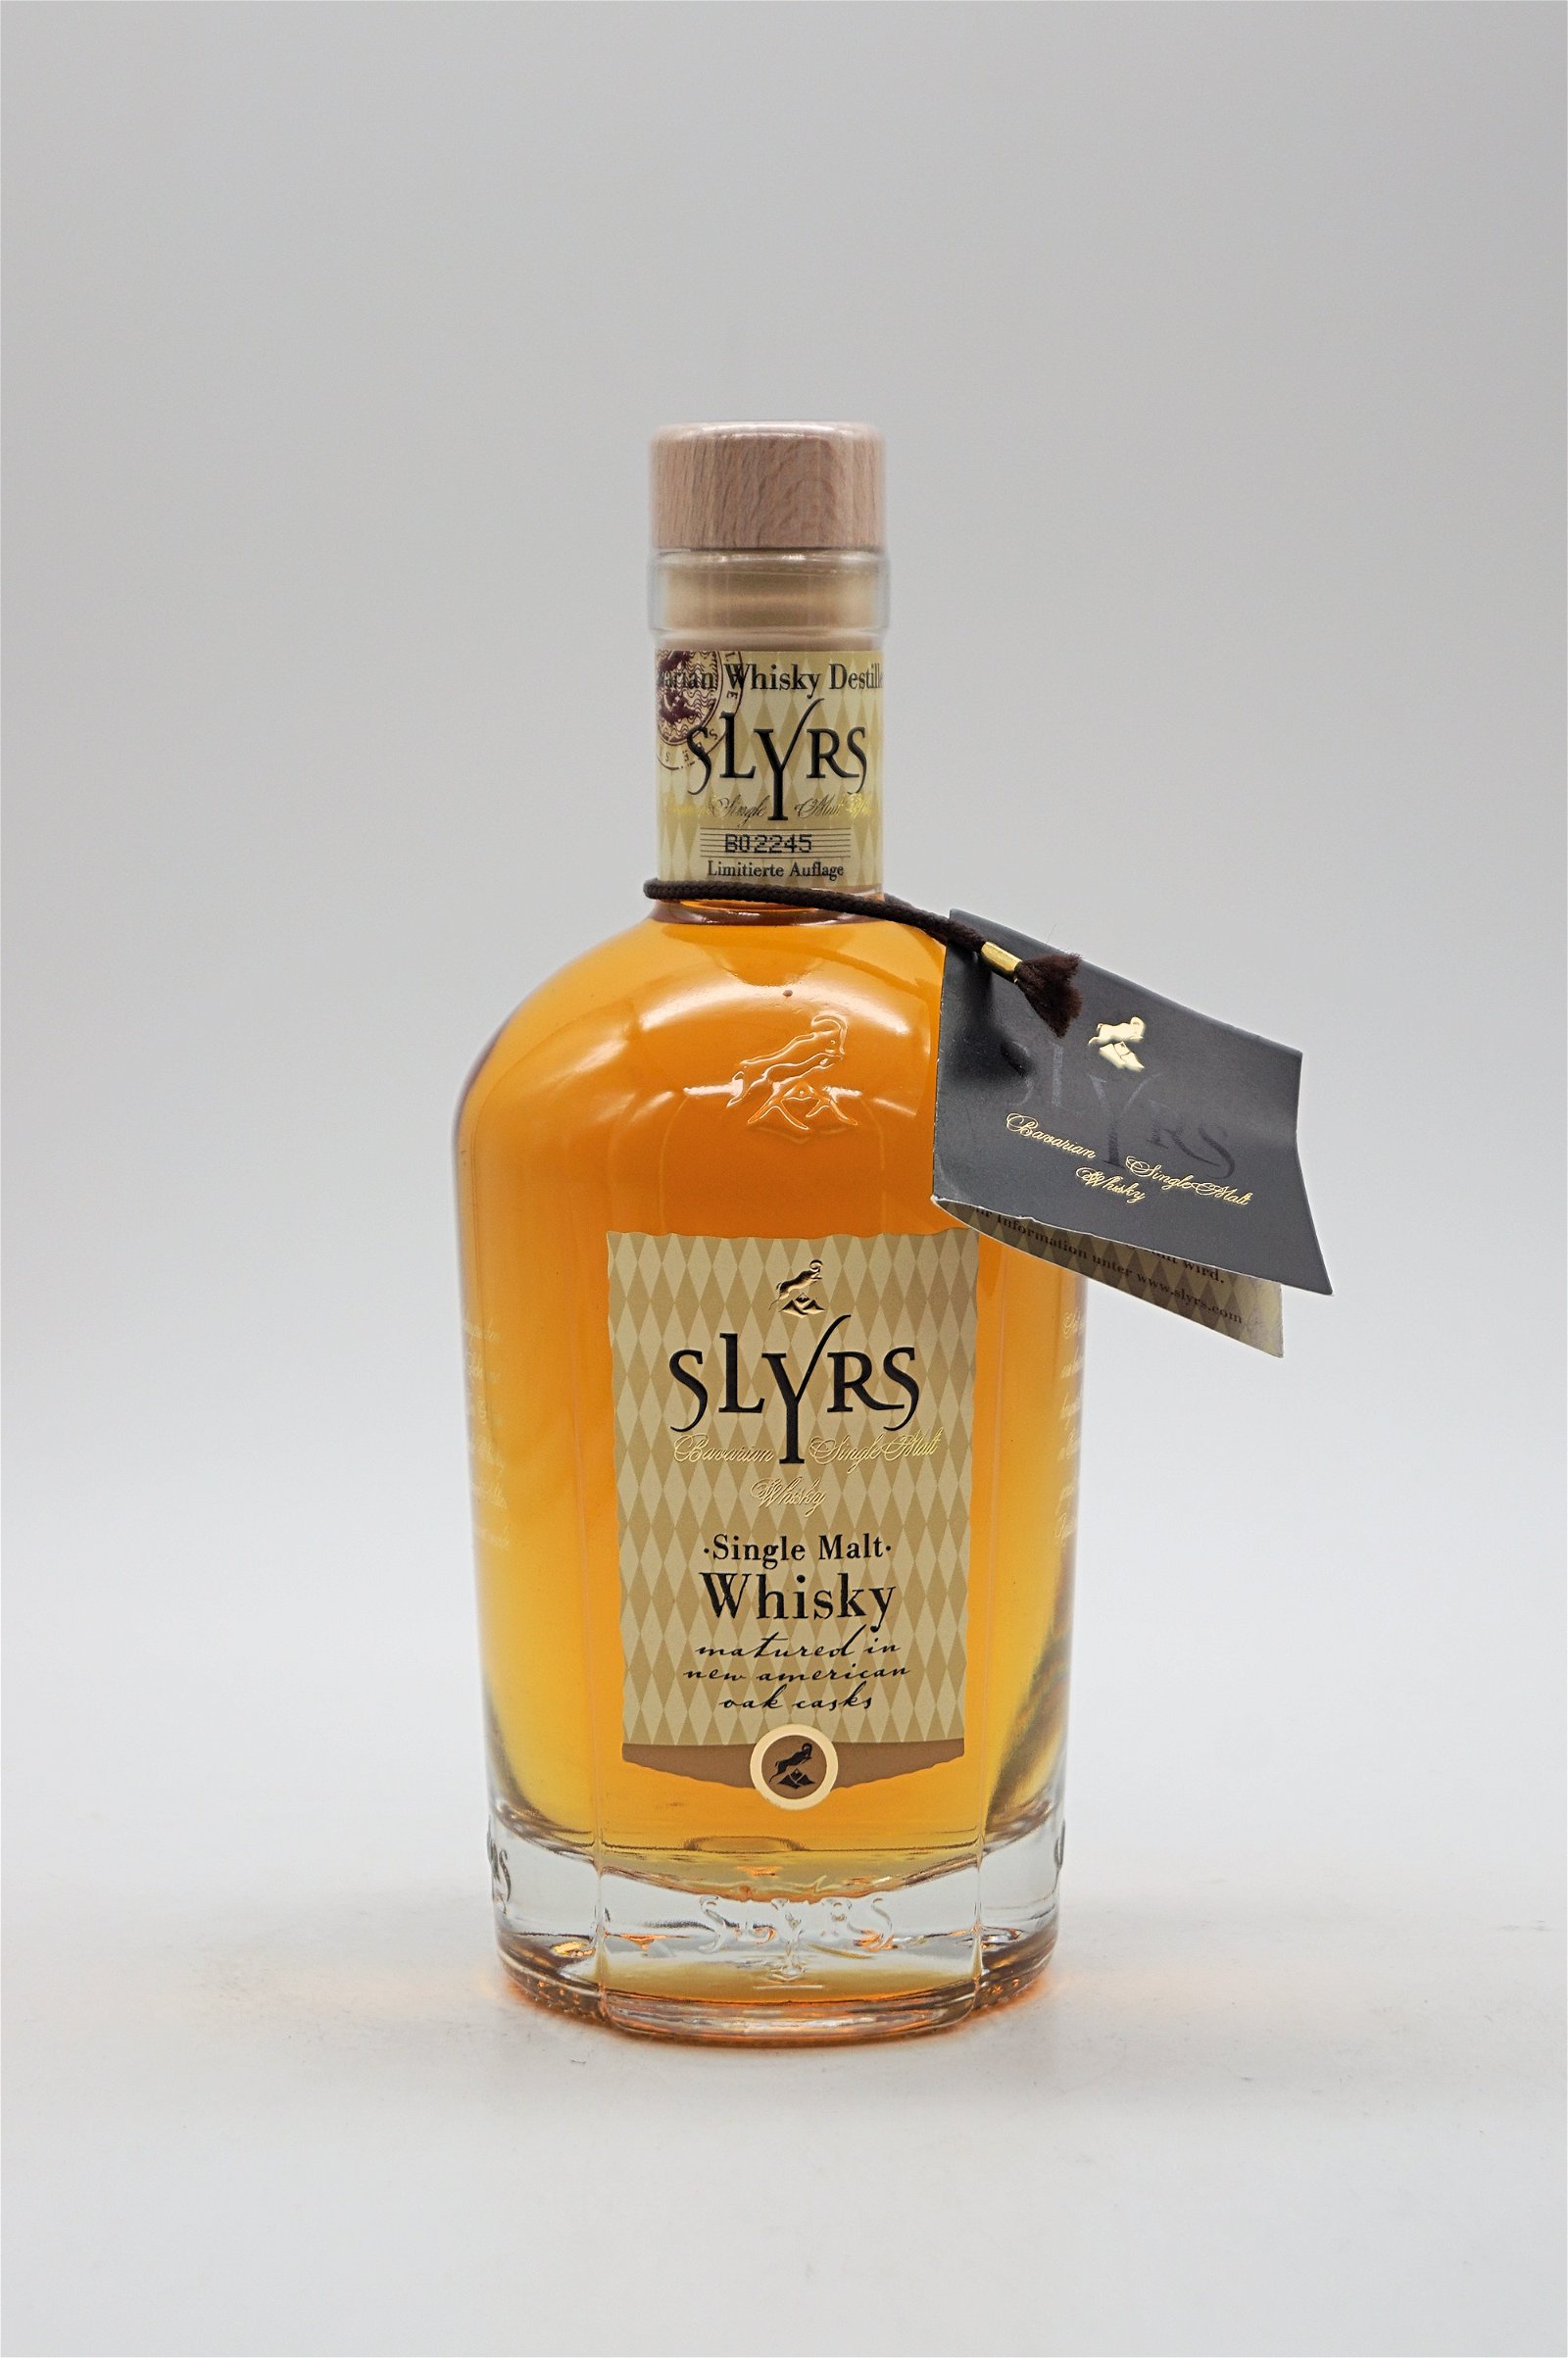 Slyrs Single Malt Whisky Classic